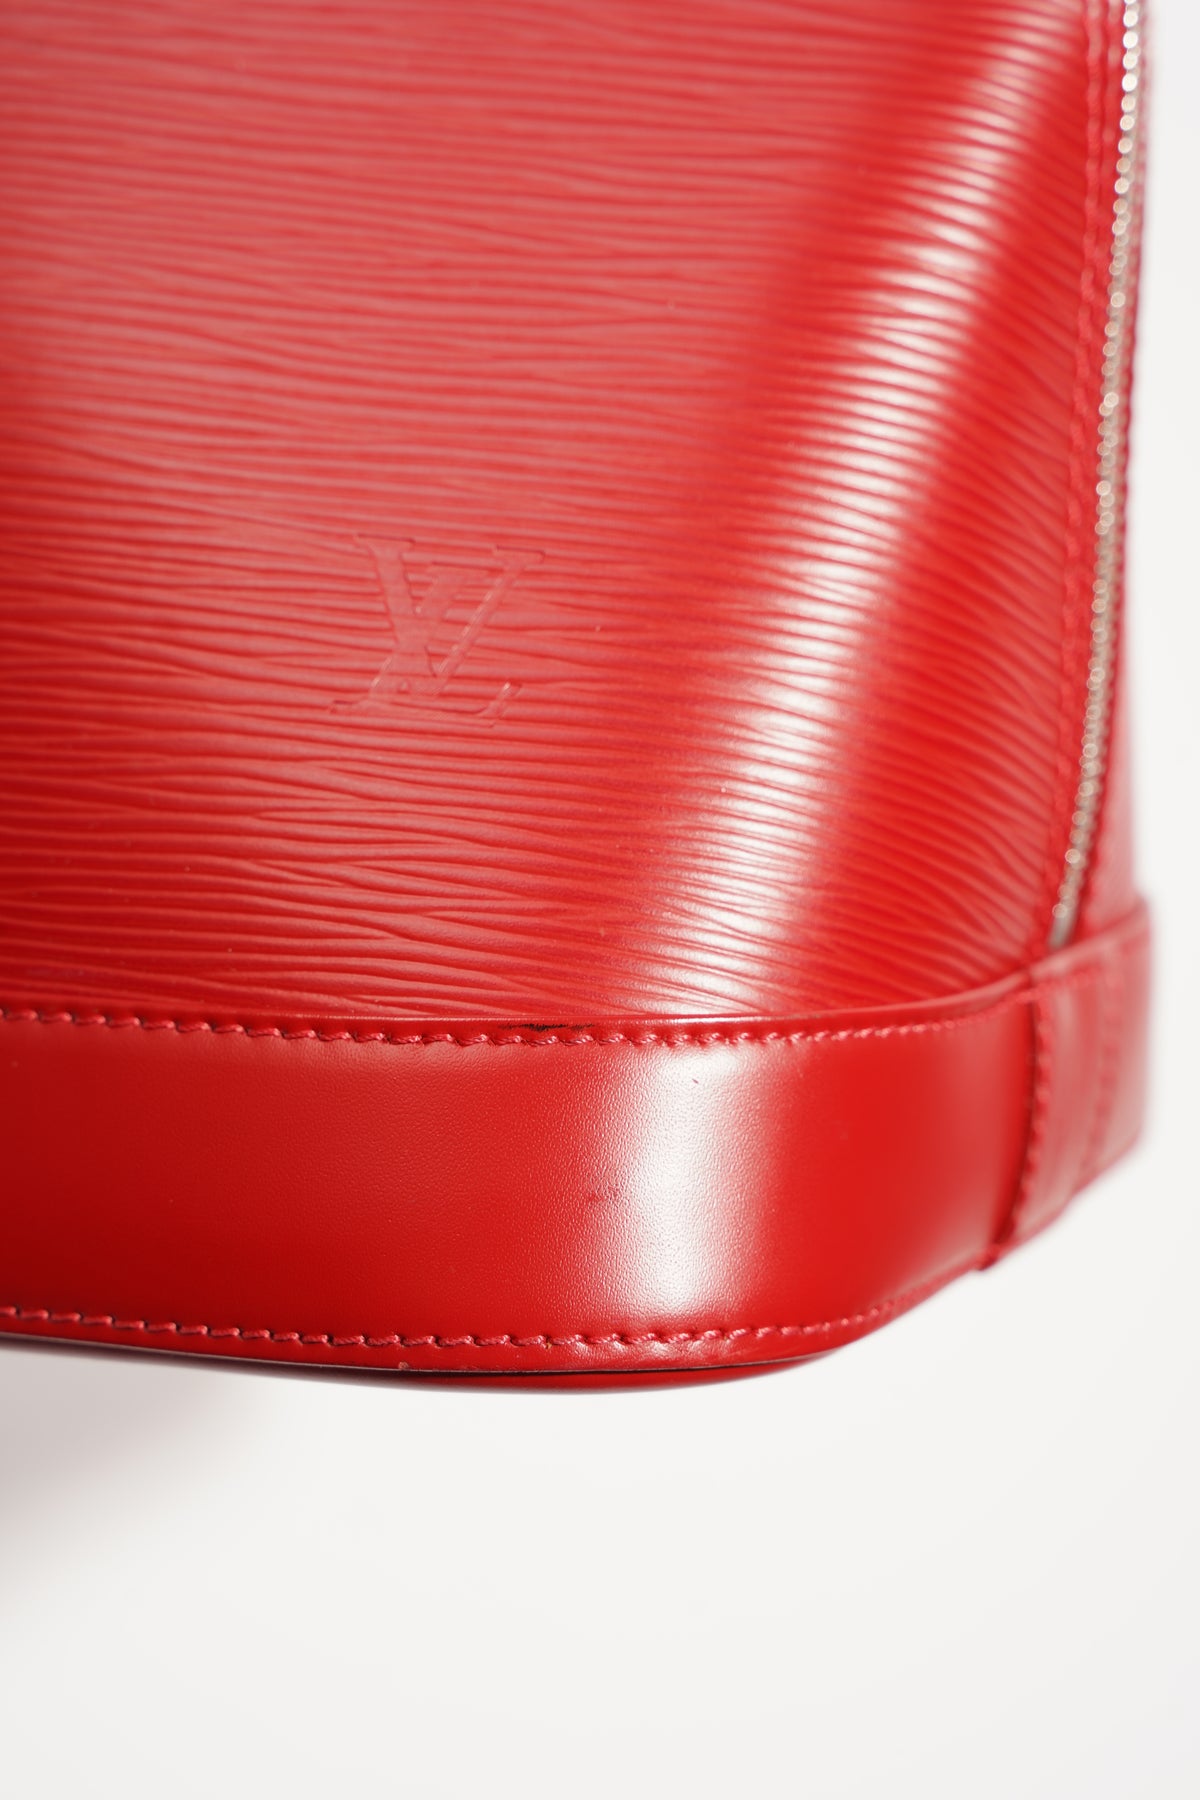 LOUIS VUITTON Handbag M52802 Alma PM Silver Hardware Epi Leather